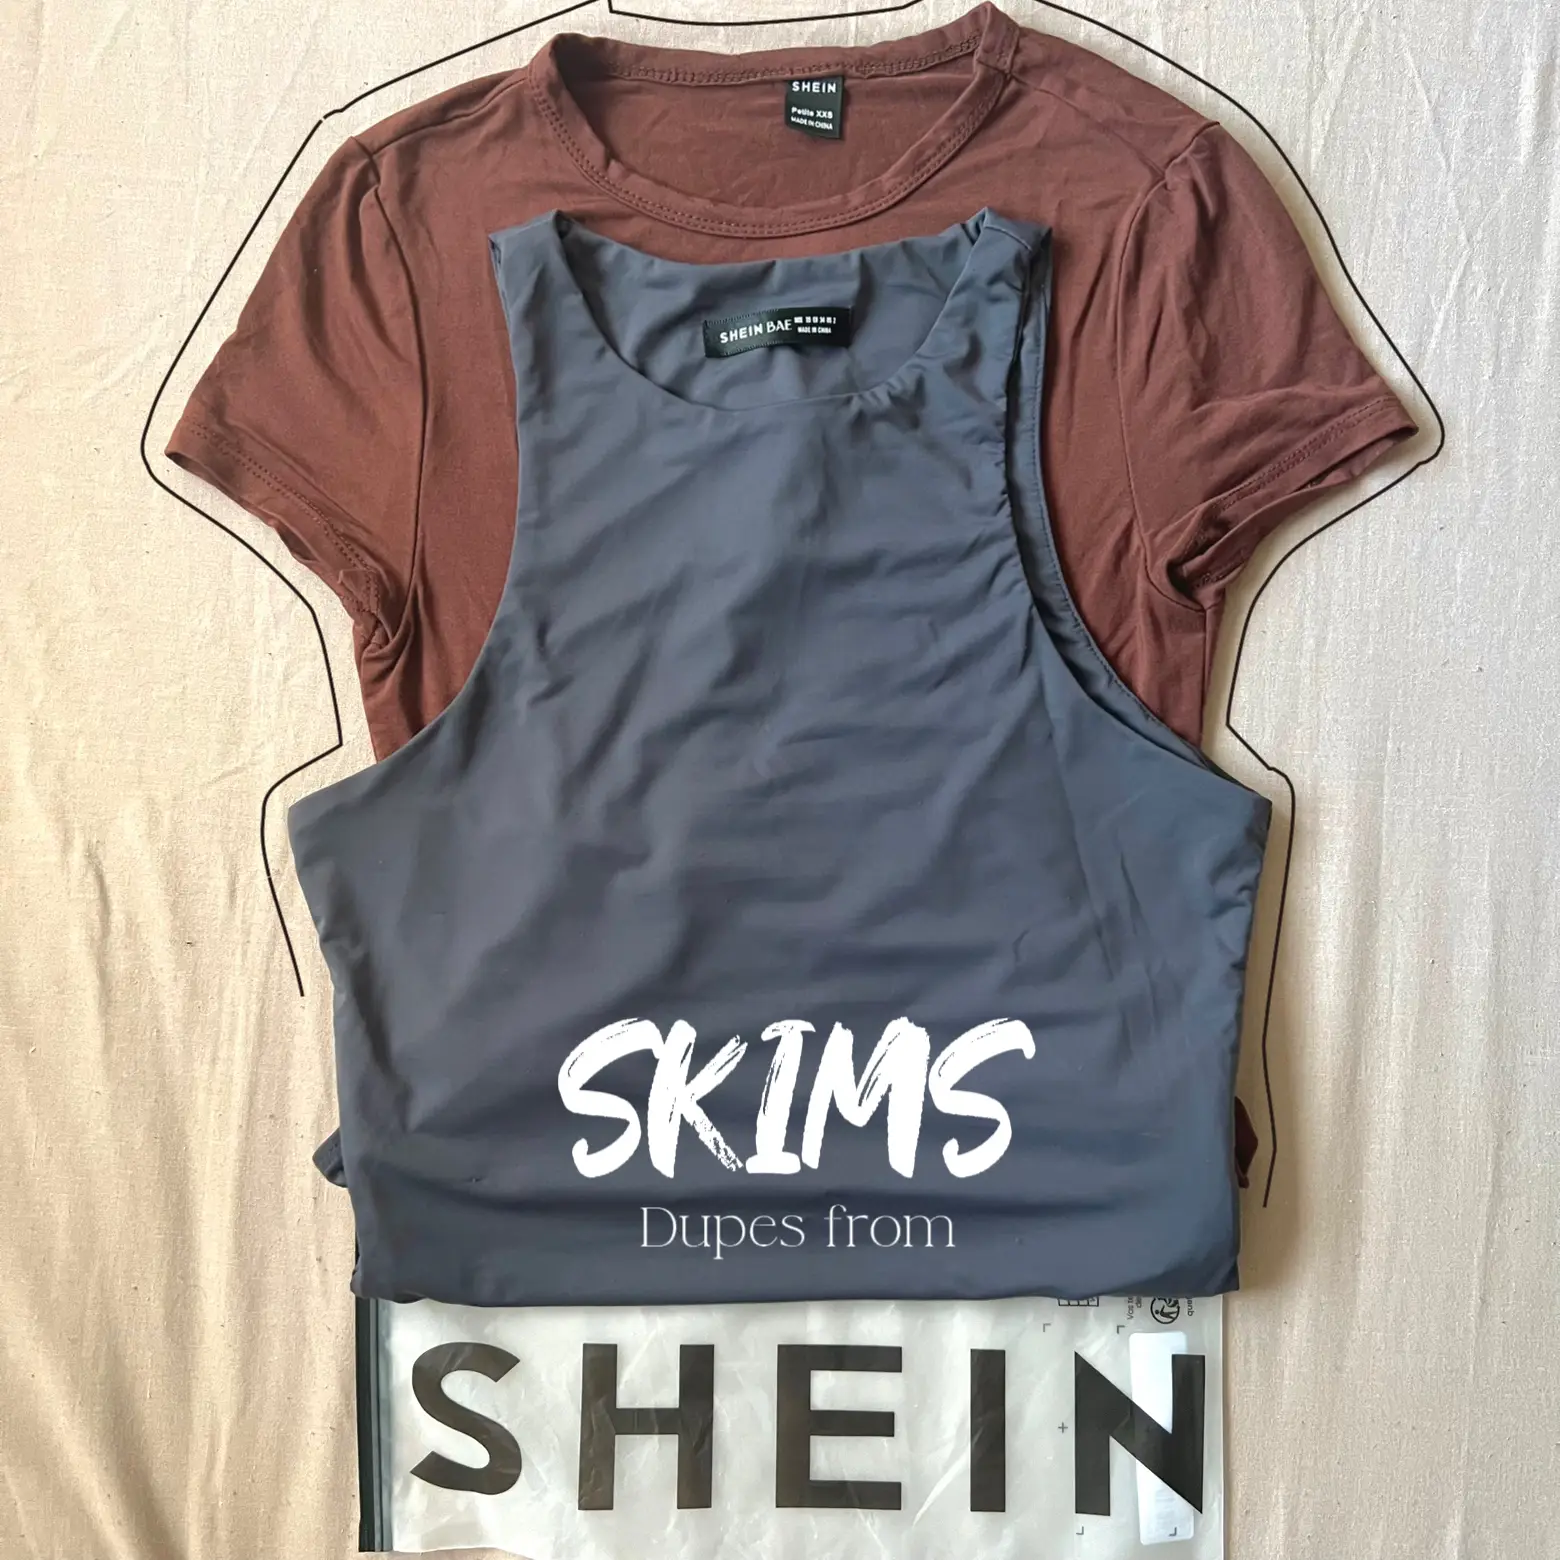 I found the best dupes for Kim Kardashian's Skims from Shein